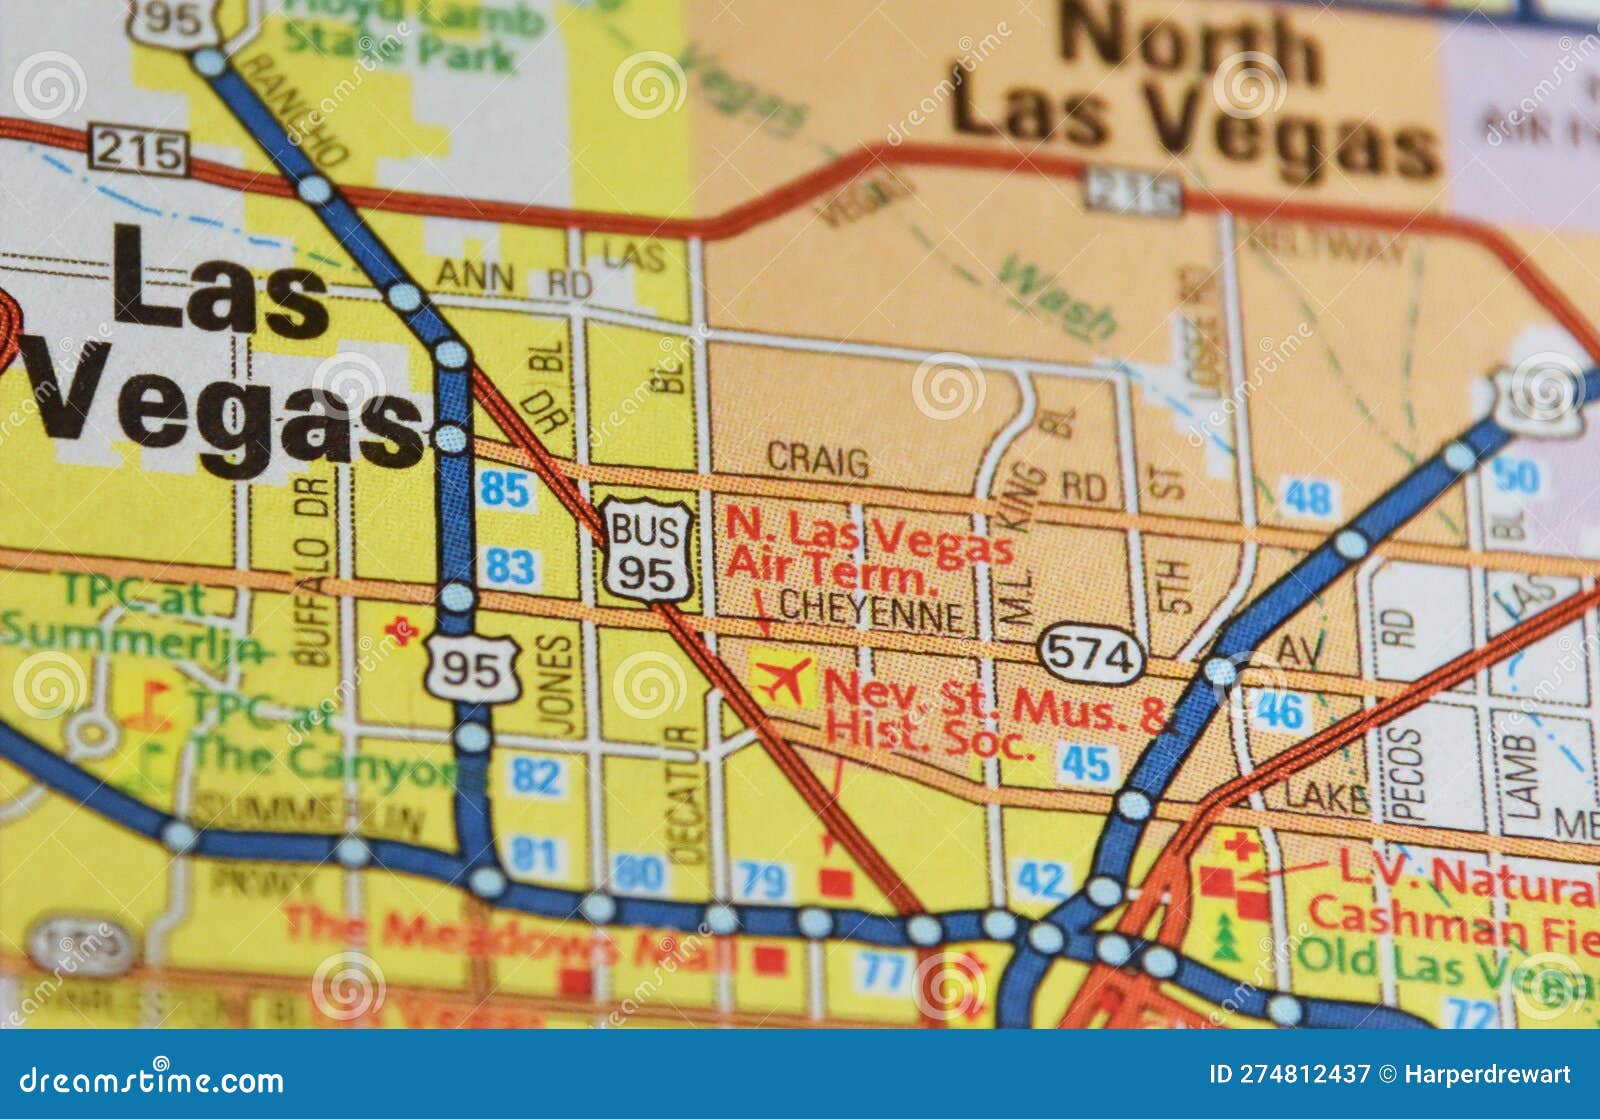 Map Image of Las Vegas Nevada Stock Image - Image of landmarks, tourism:  274812437